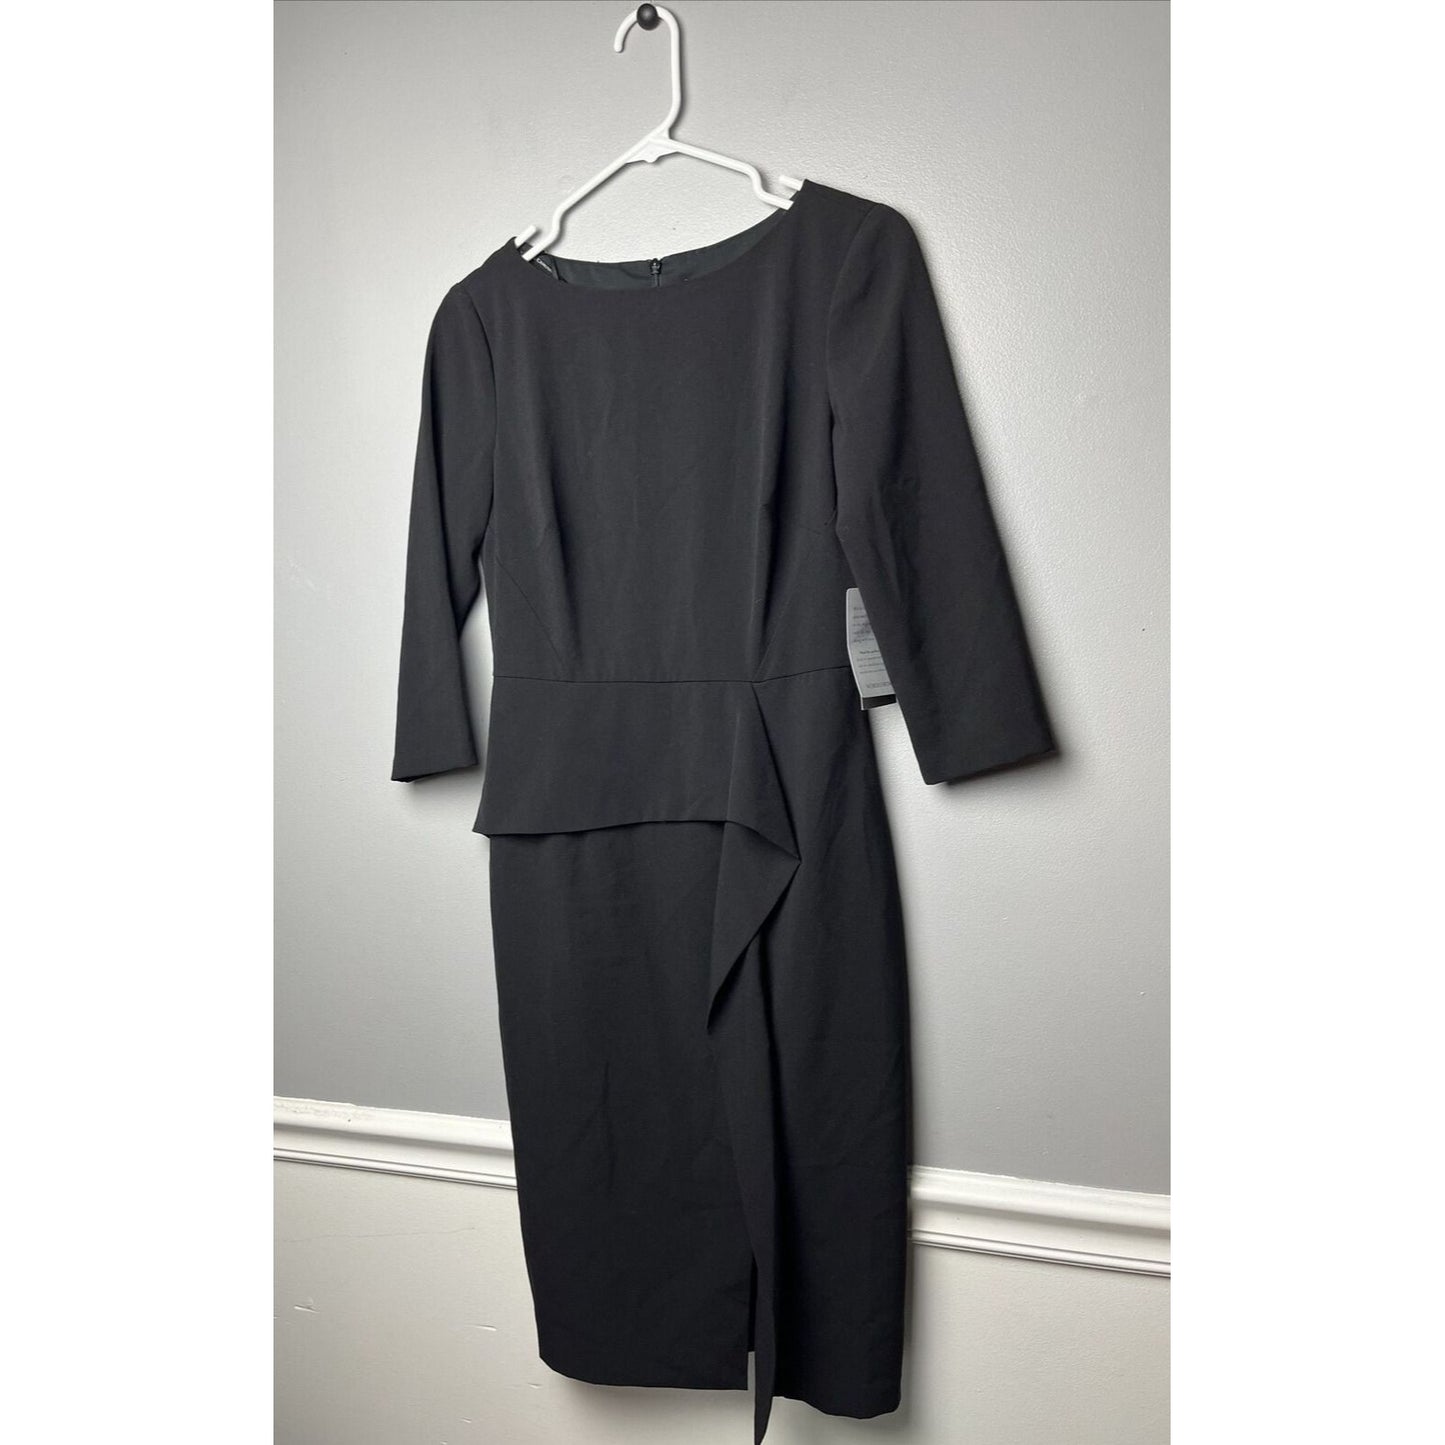 Vince Camuto Women's Black Angled Ruffle Sheath Midi Dress Size 4 MSRP $138